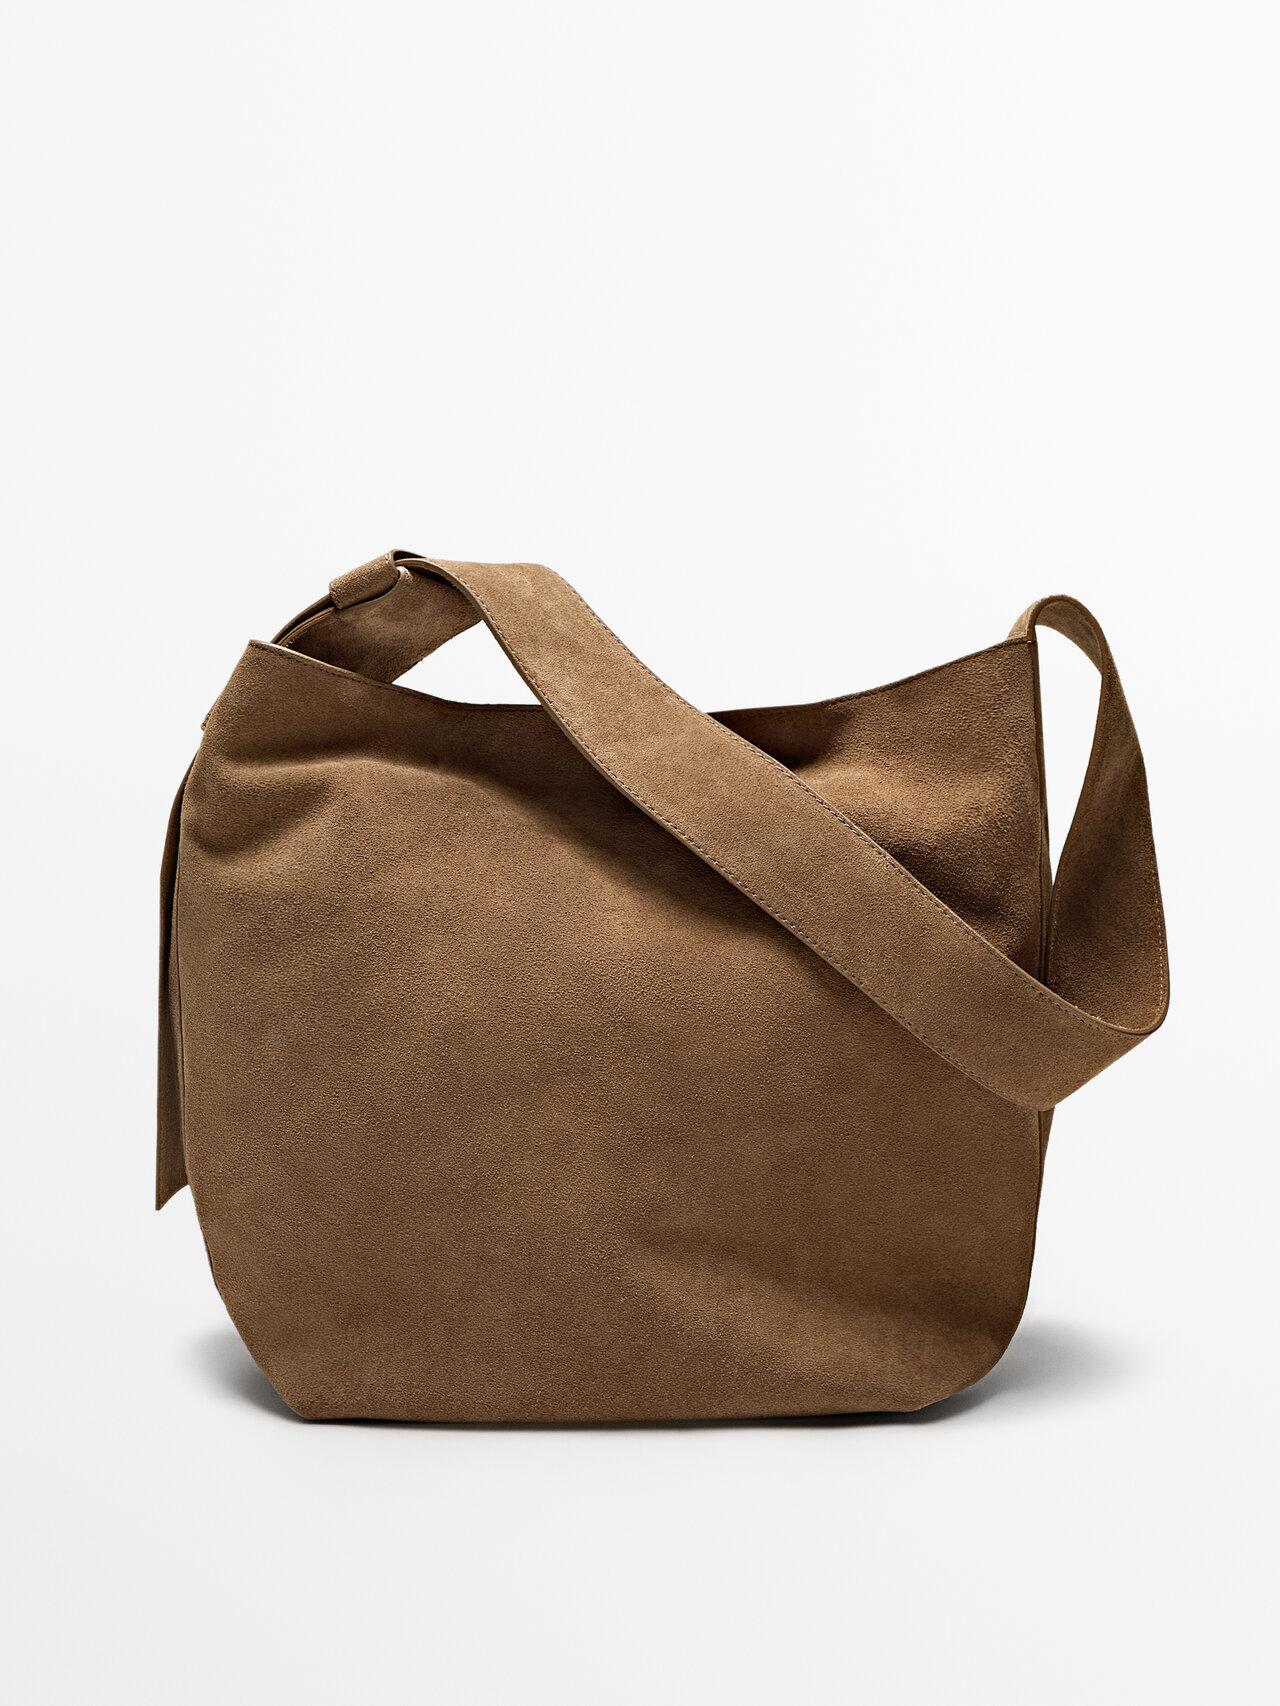 Massimo Dutti Split Suede Leather Handbag In Brown